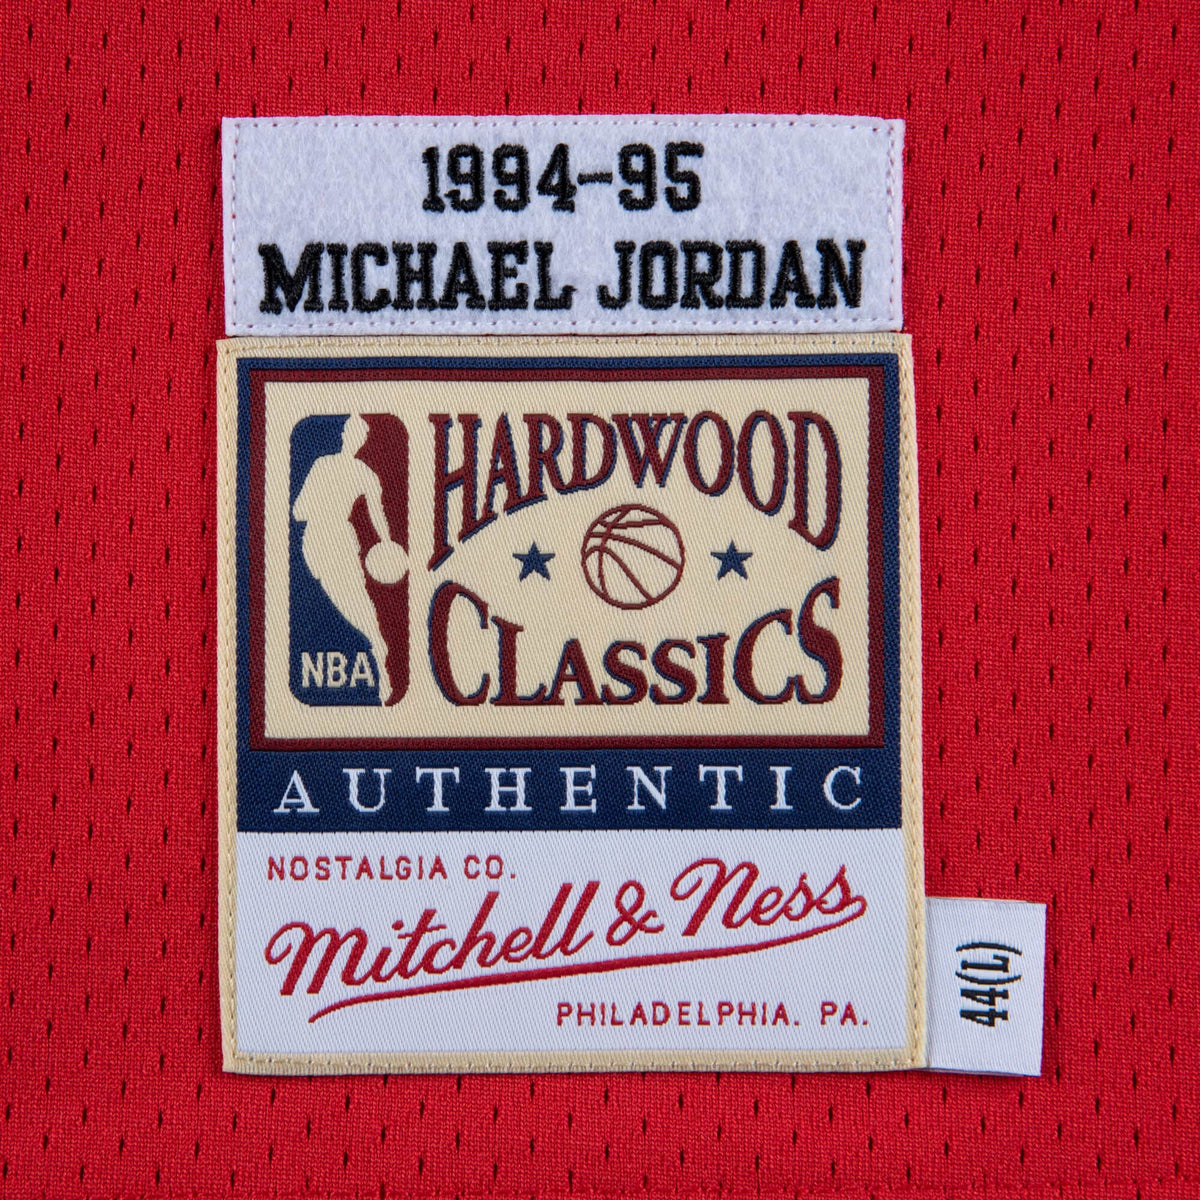 Mitchell And Ness x NBA Men Chicago Bulls Michael Jordan Jersey - White 94  (white)